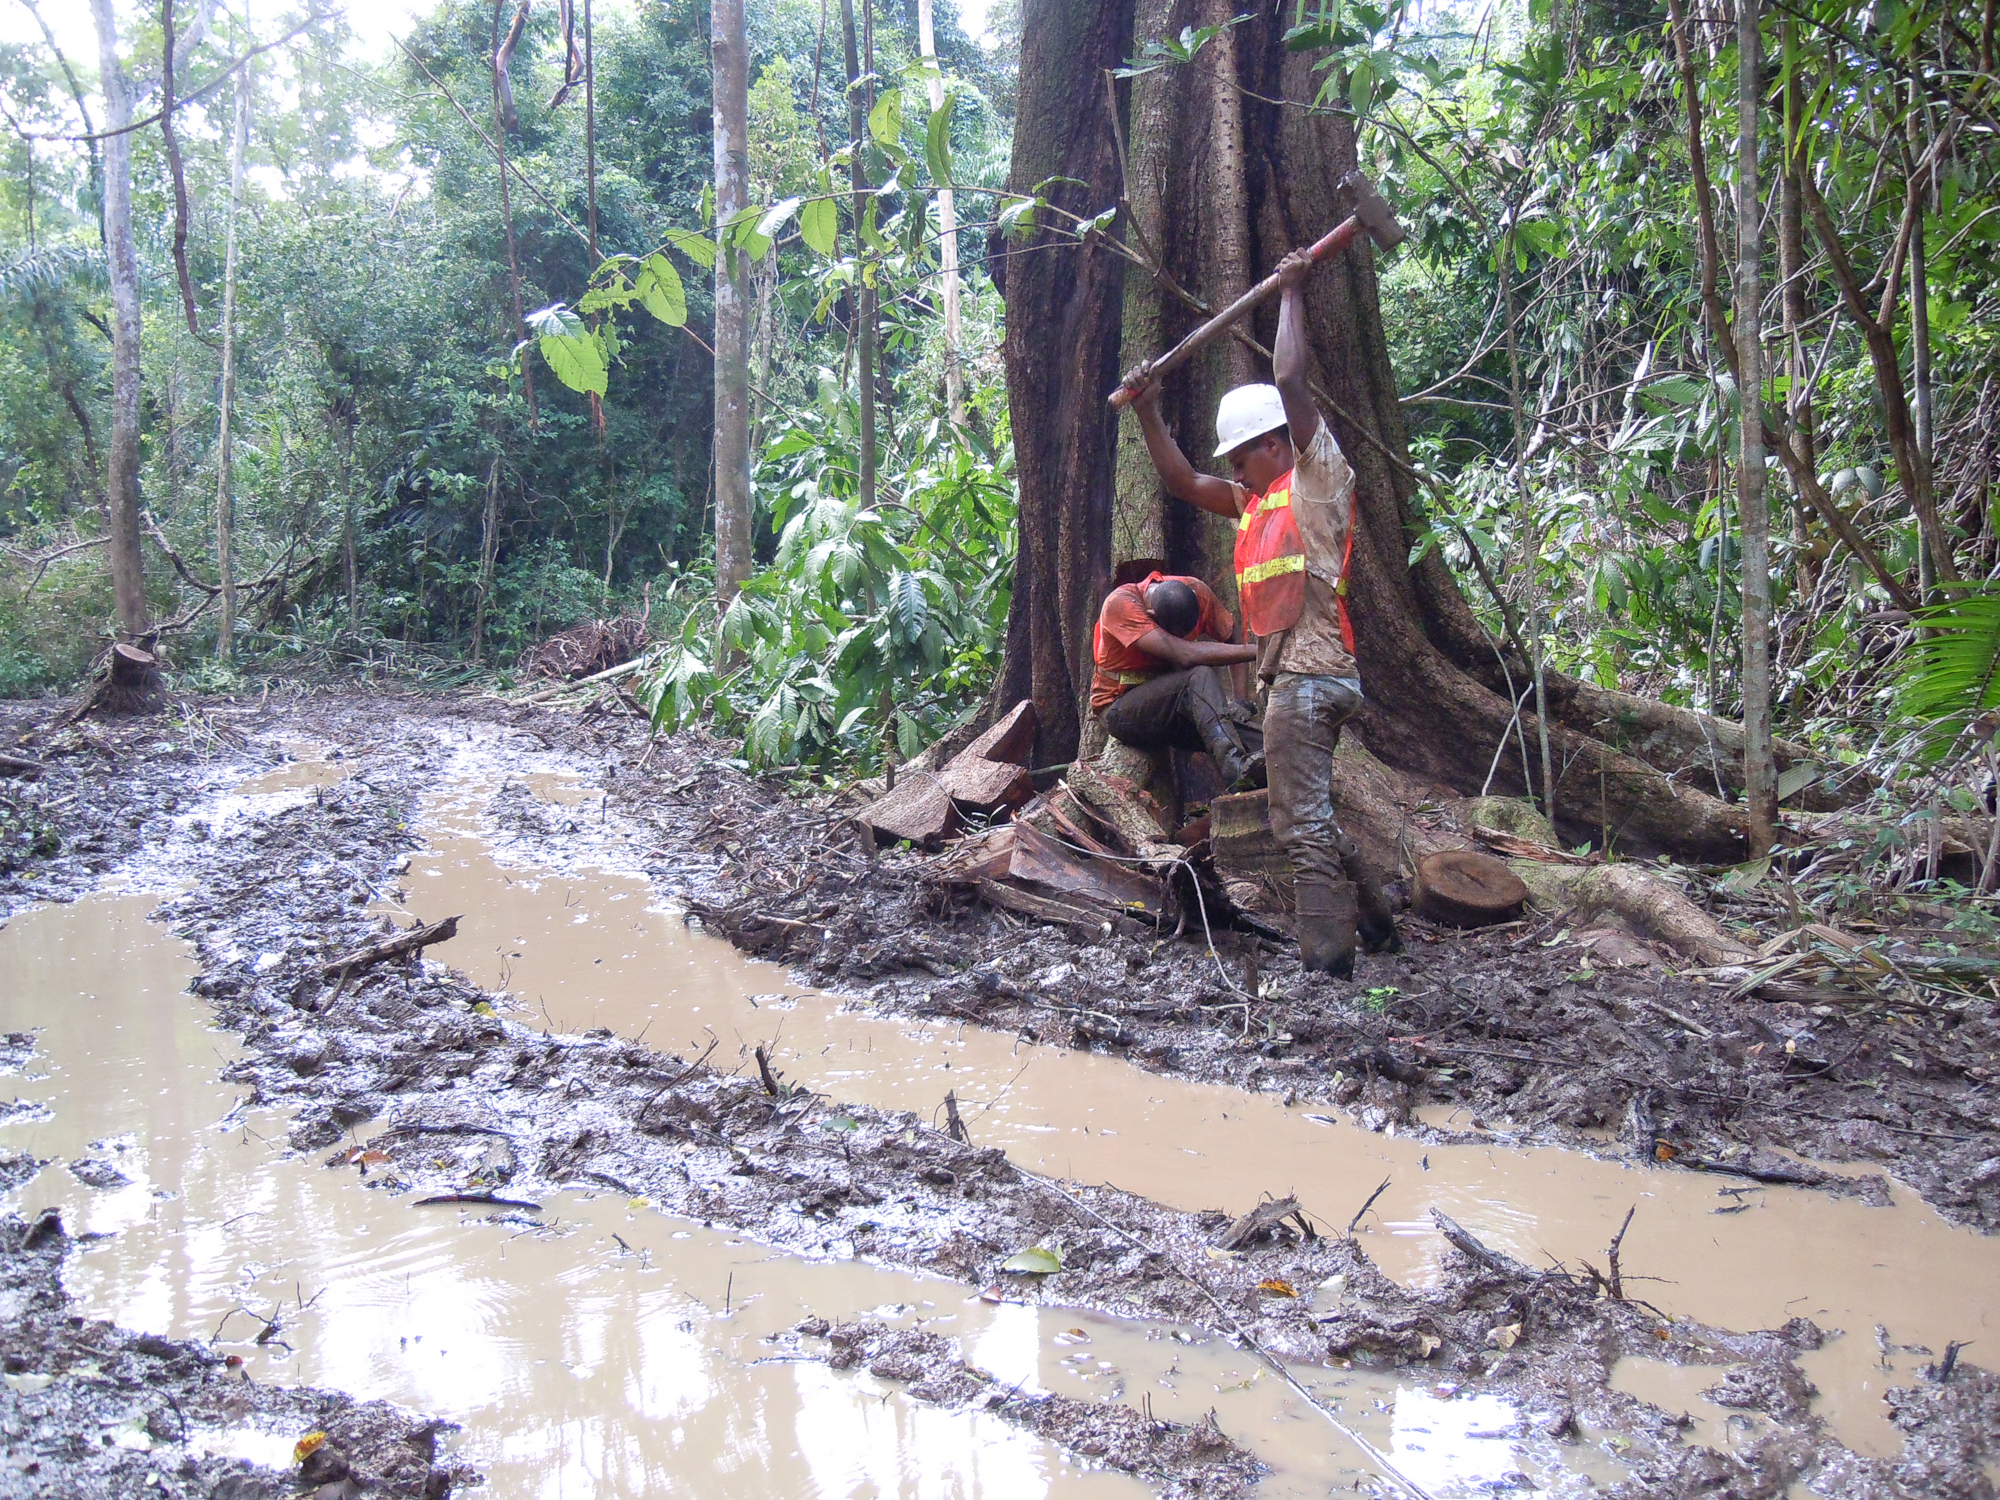 Seismic Line through the Jungles of Panama